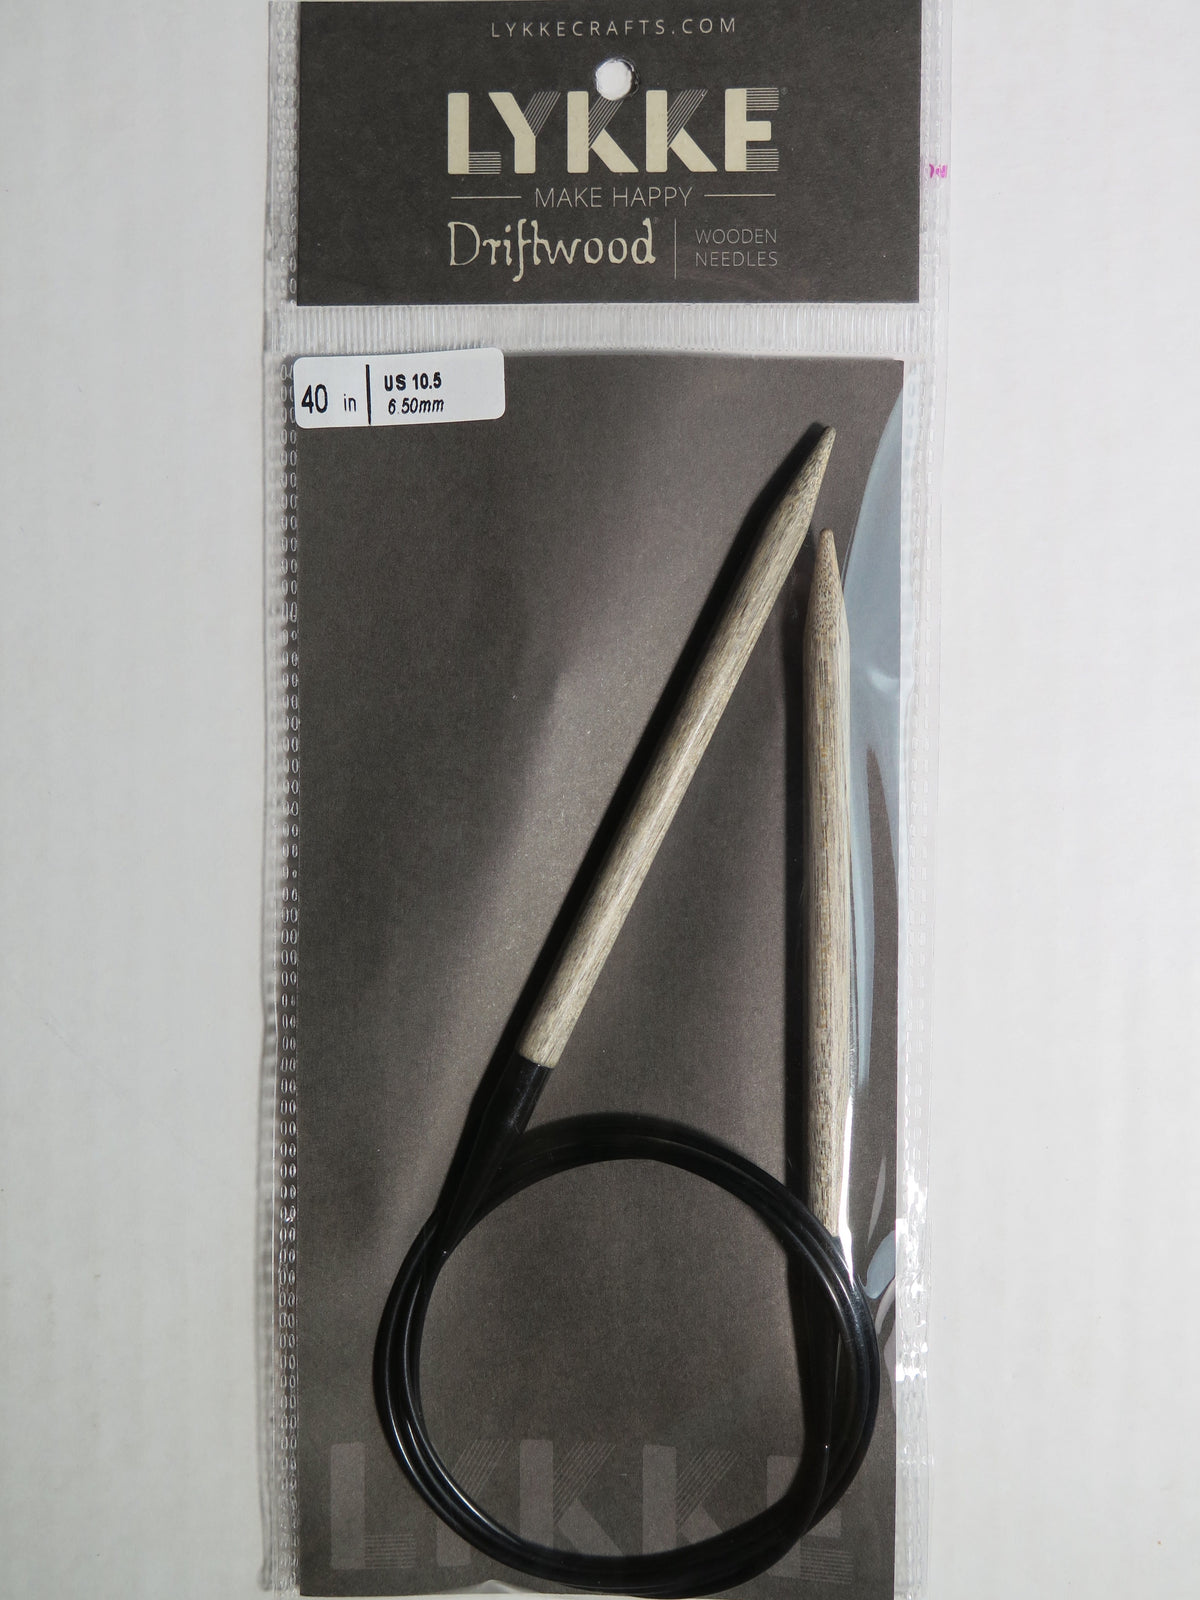 Lykke Driftwood 40in US10.5 6.50mm Circular Needle